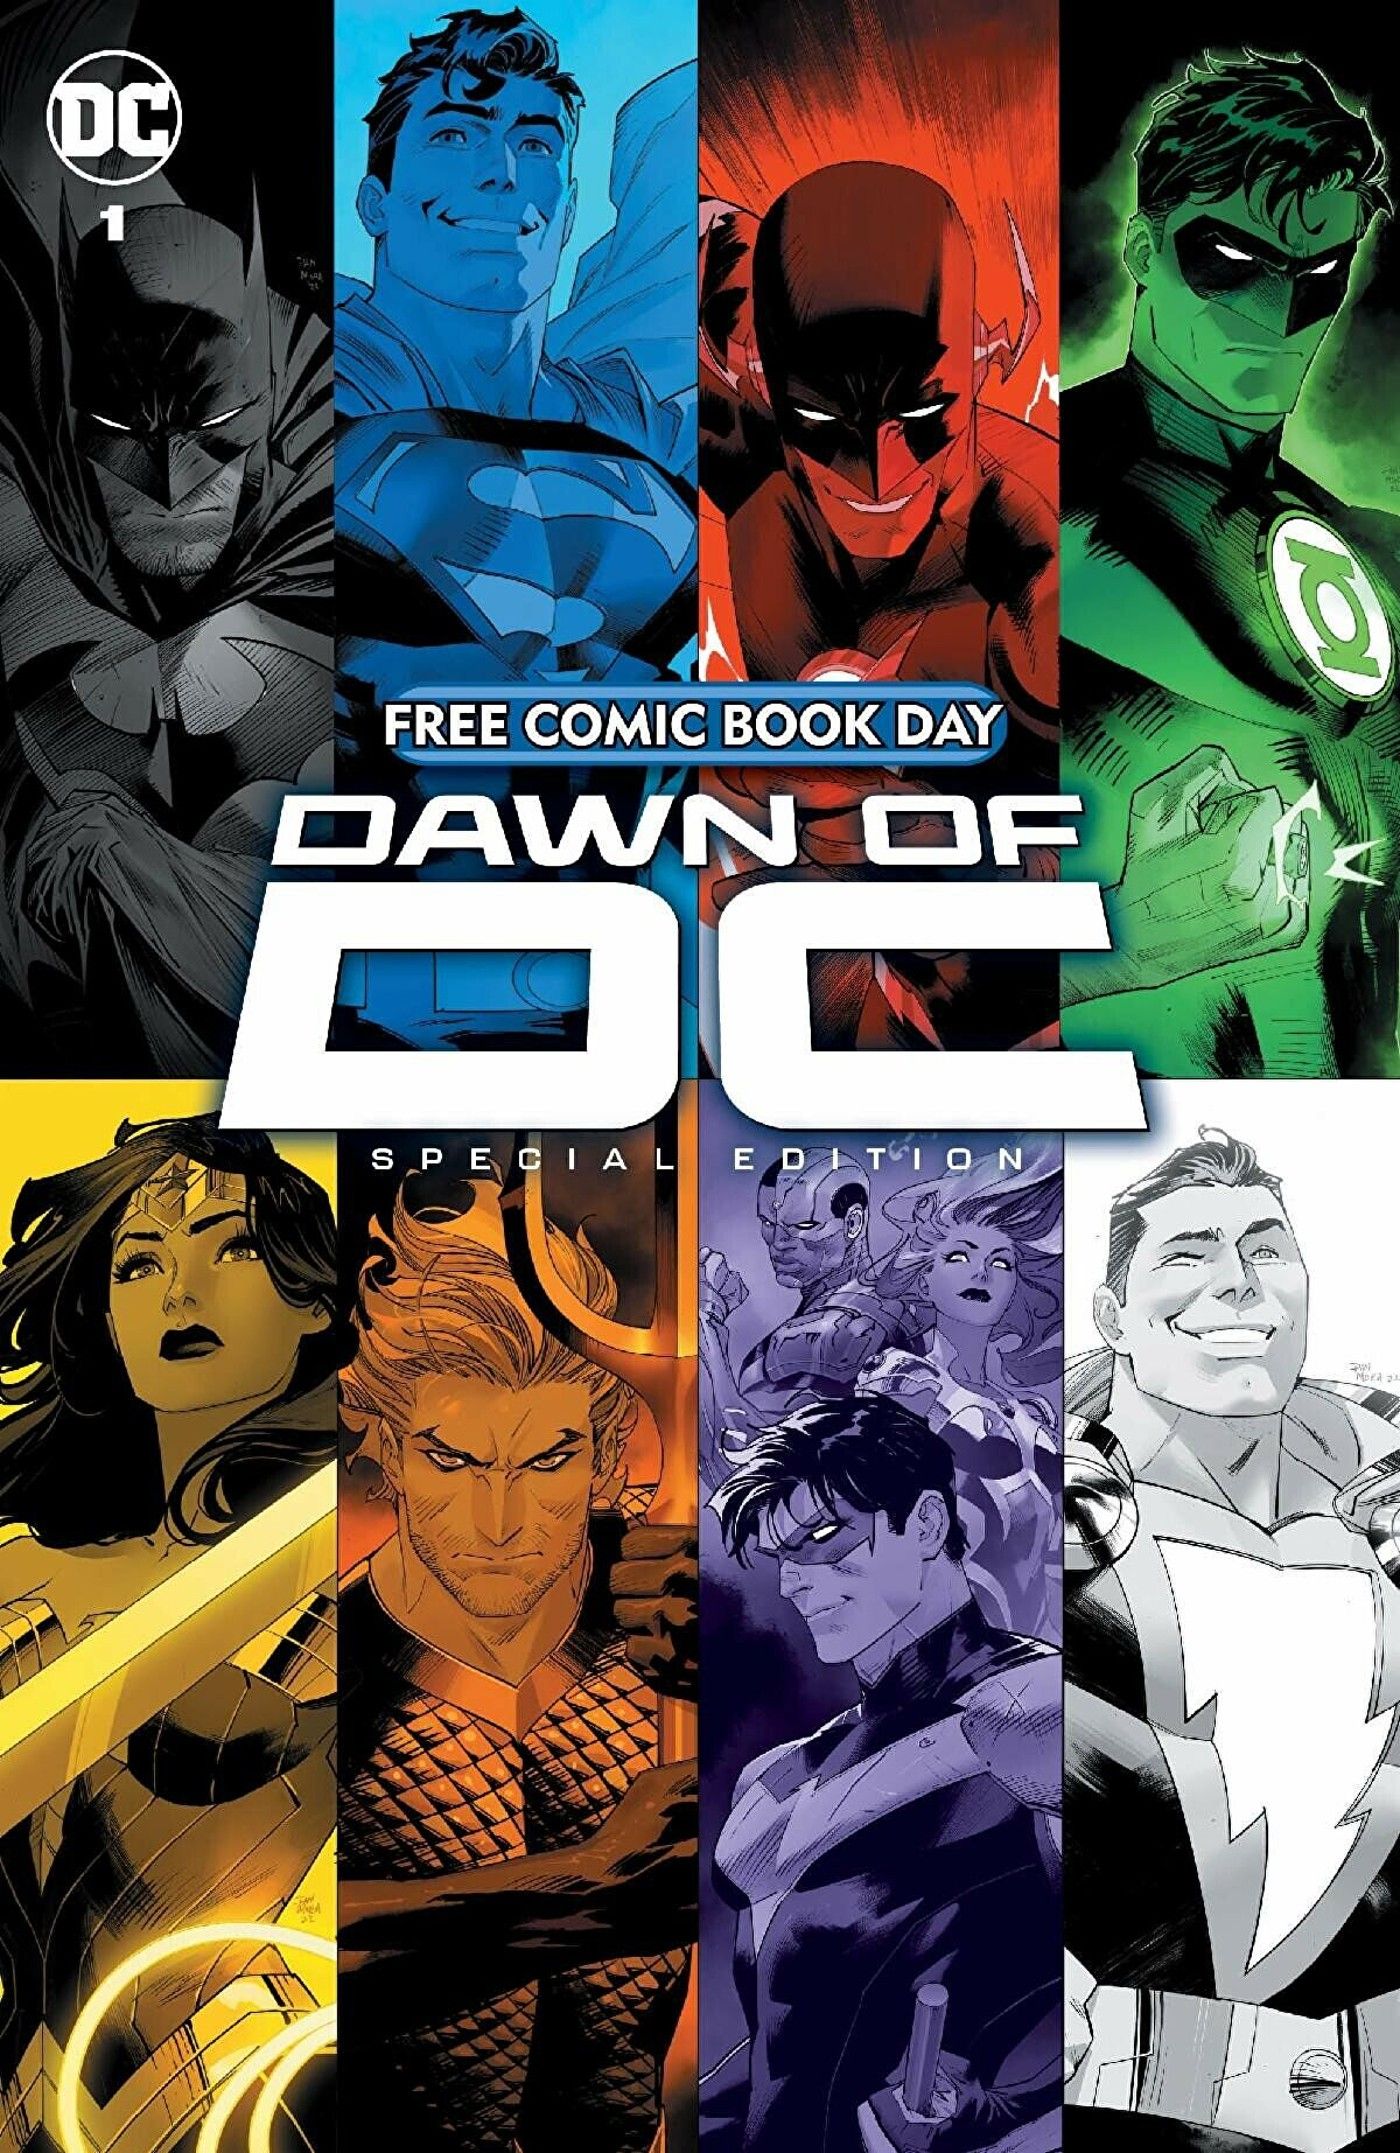 Dawn of DC FCBD Cover by Dan Mora Featuring Justice League